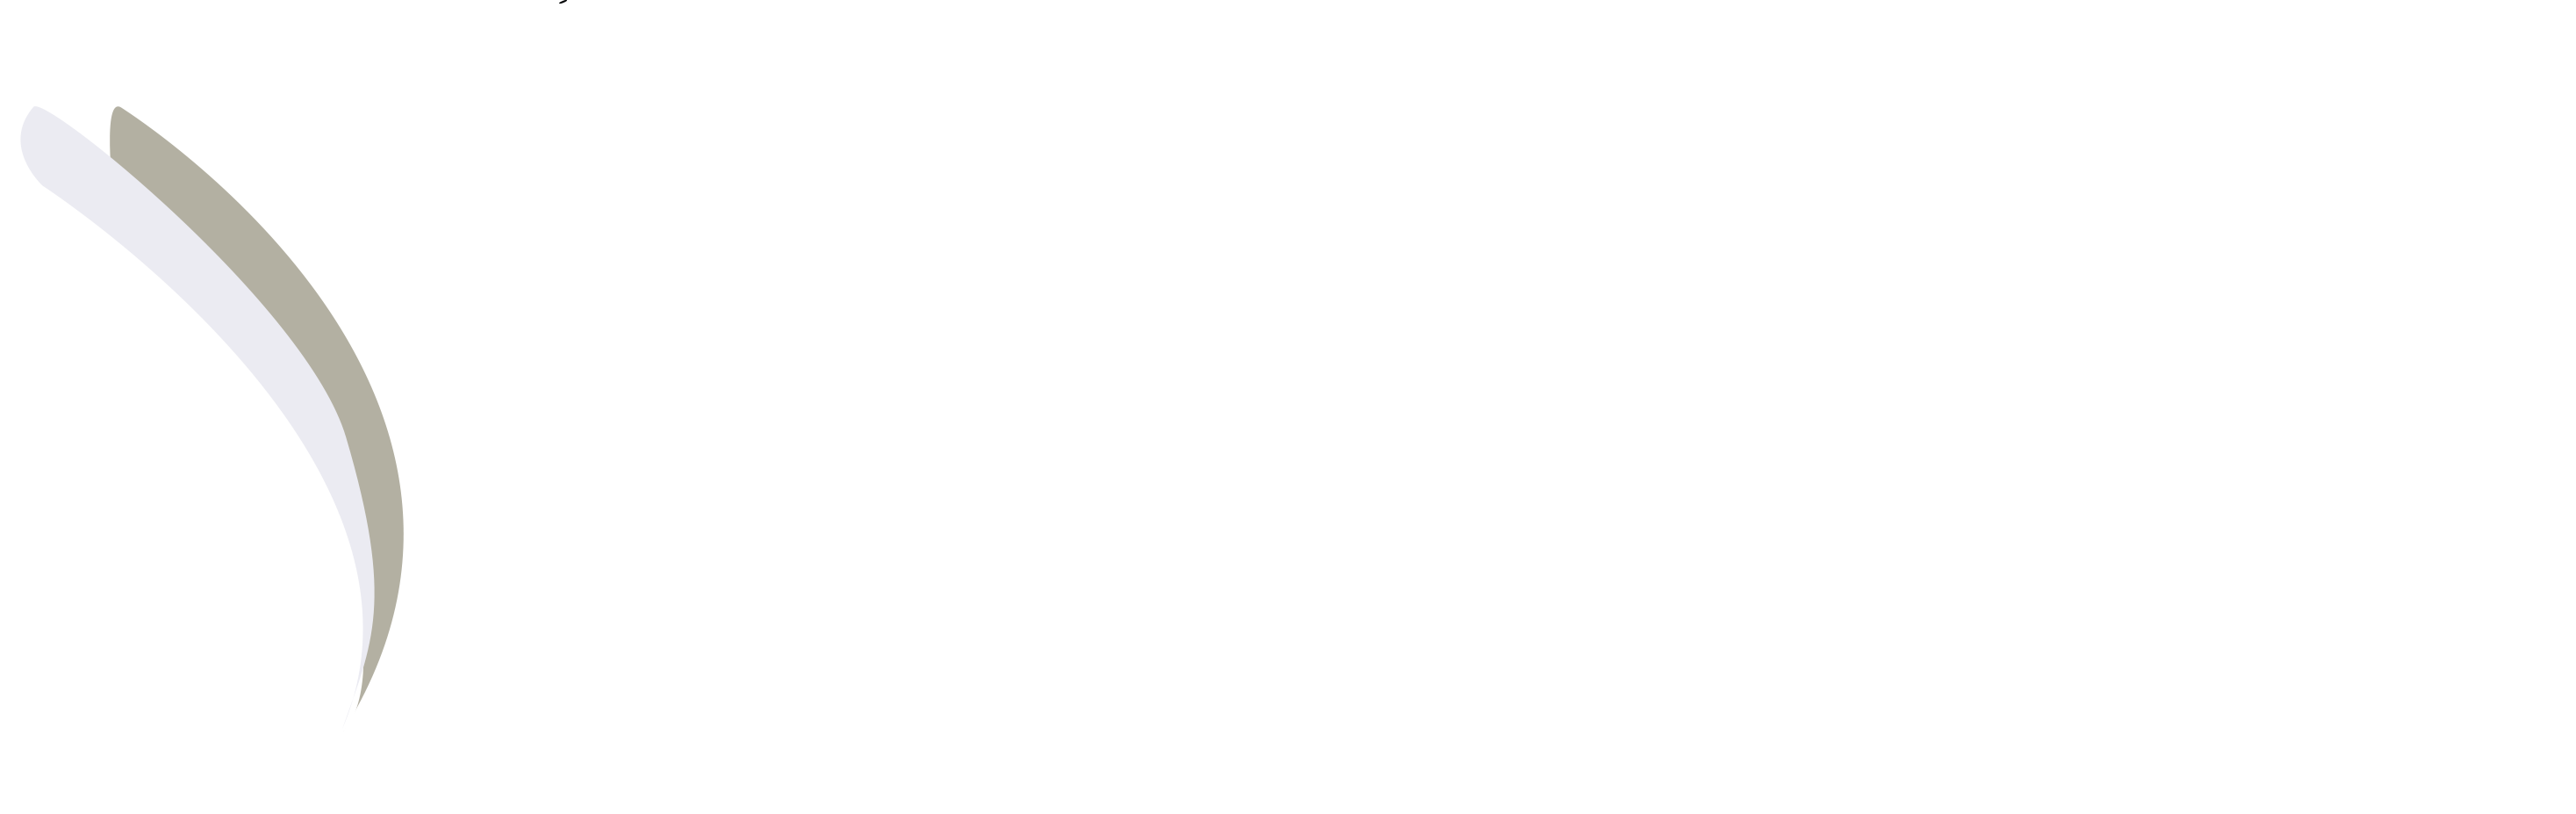 ELQODS VOYAGES